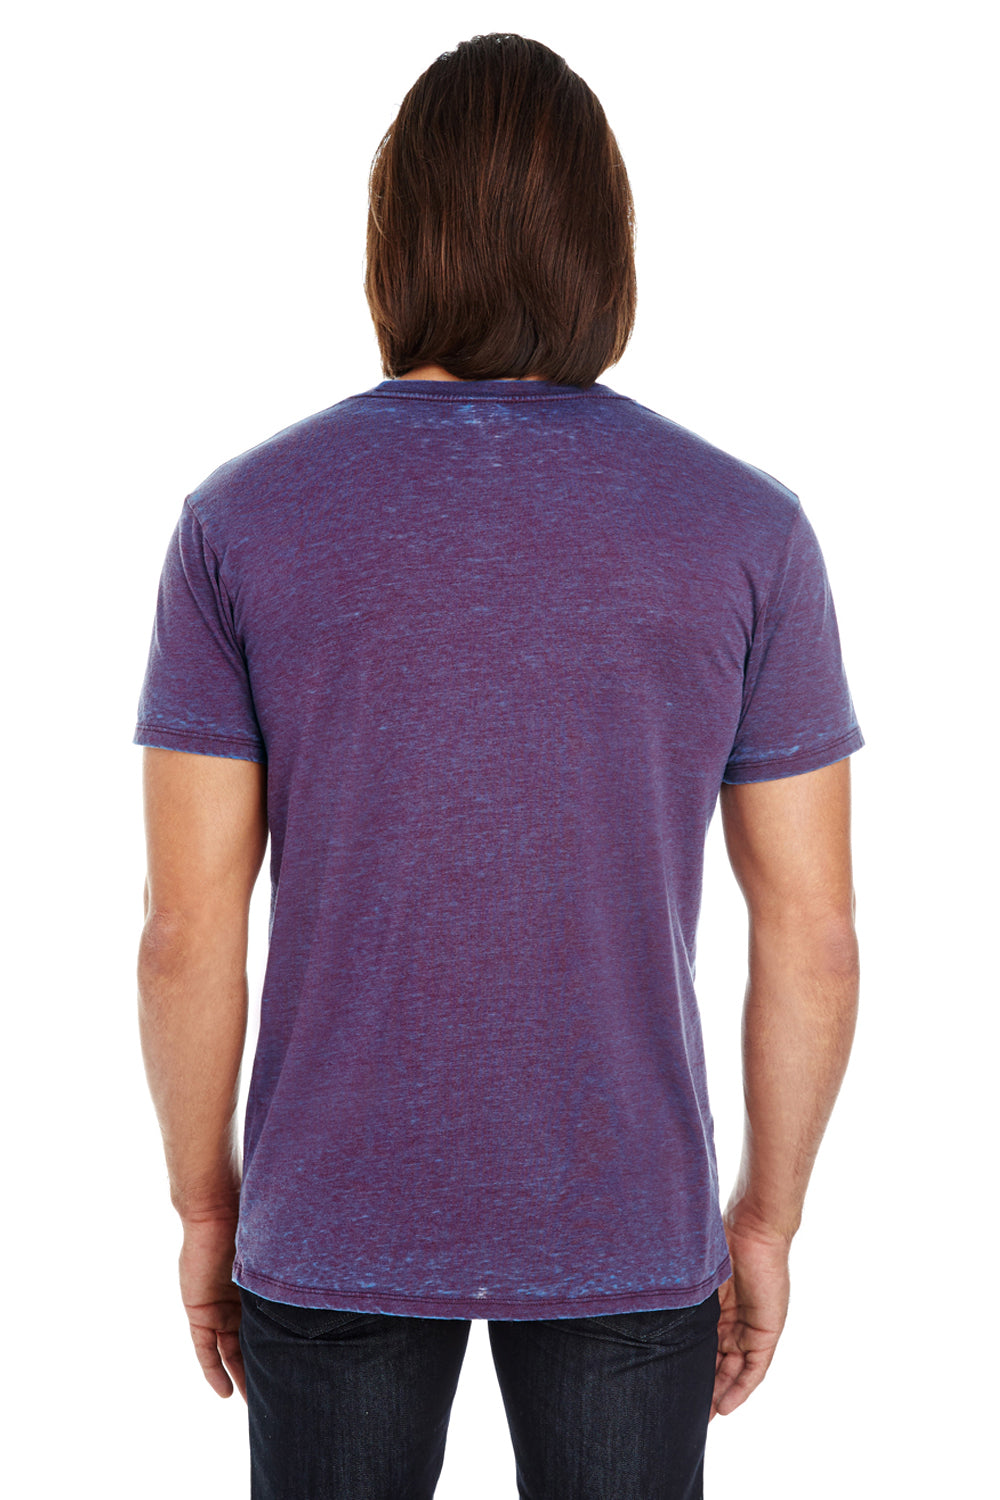 Threadfast Apparel 115A Mens Cross Dye Short Sleeve Crewneck T-Shirt Berry Purple Back